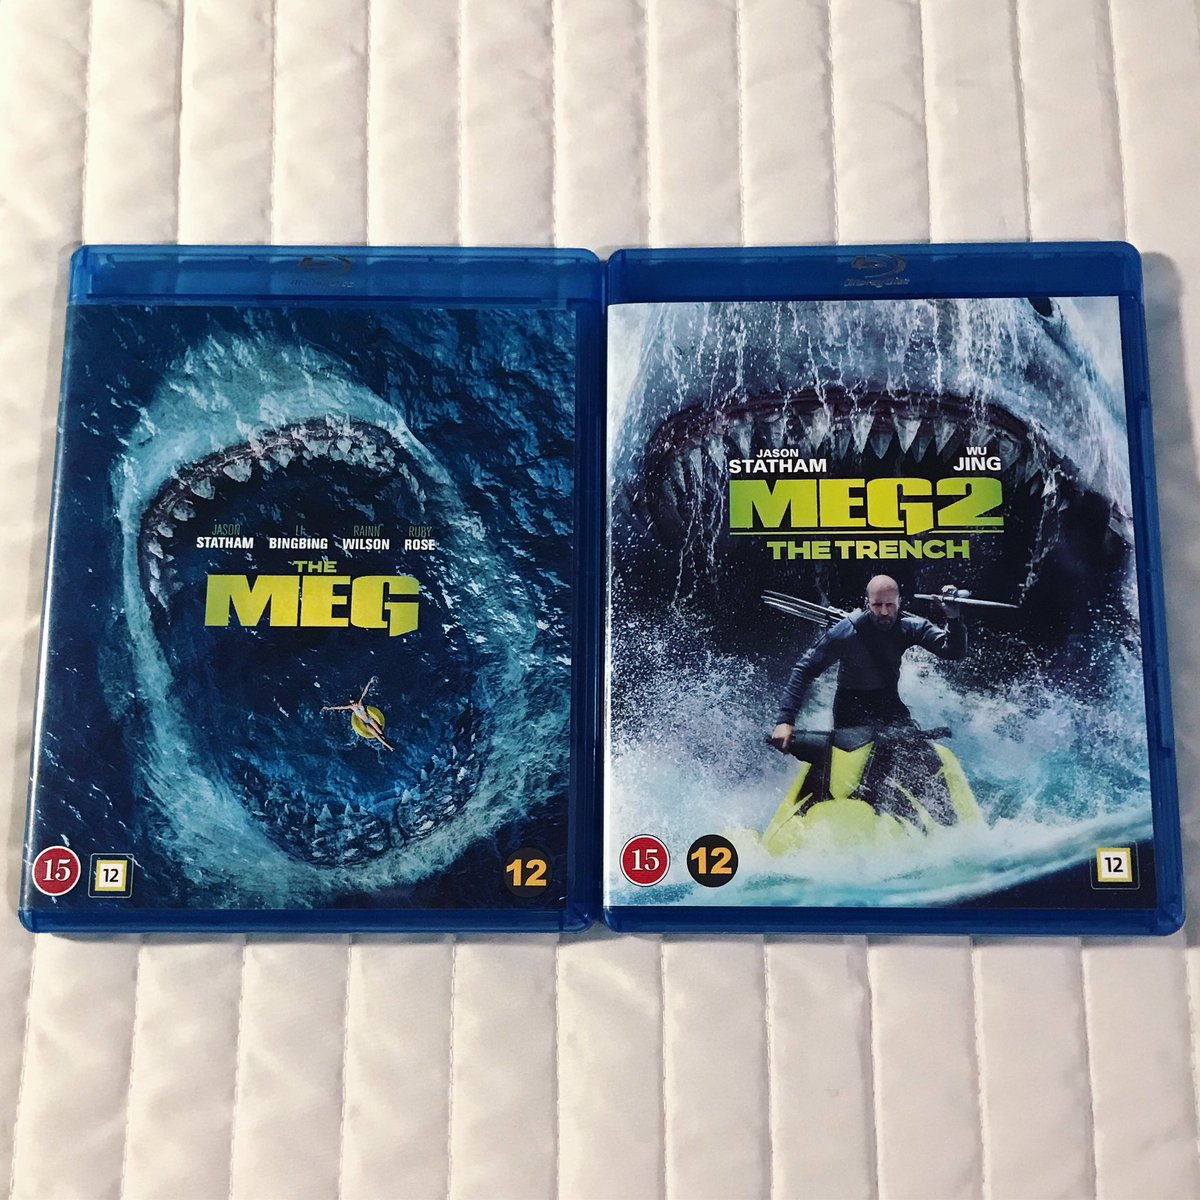 Time to watch 'The Meg' (2018) followed by the sequel 'Meg 2: The Trench' (2023) on Blu-ray. Fun monster movies starring Jason Statham. 🎥🎞

#TheMeg #MegMovie #Meg2 #Meg2TheTrench #JasonStatham #horror #monstermovie #naturalhorror #sharkmovie #bluray #cultmovie